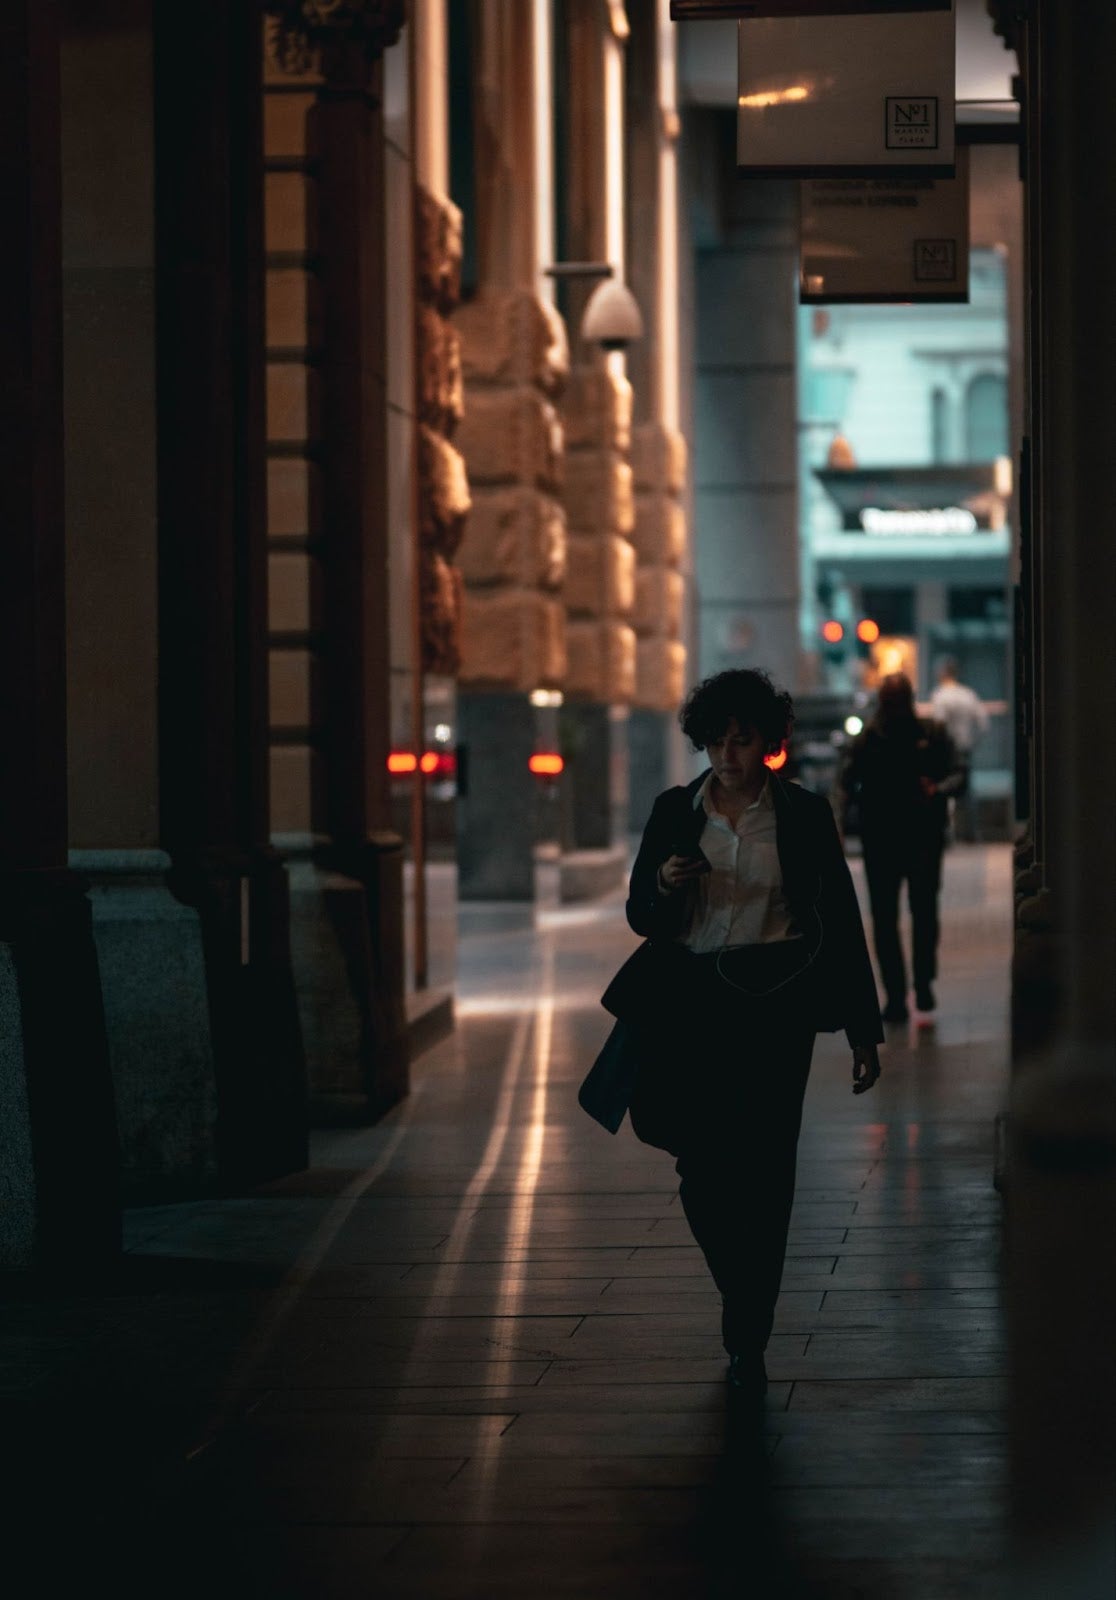 A Woman Walking Down A Dark Alleyway, Unaware She Is Being Stalked By Men.